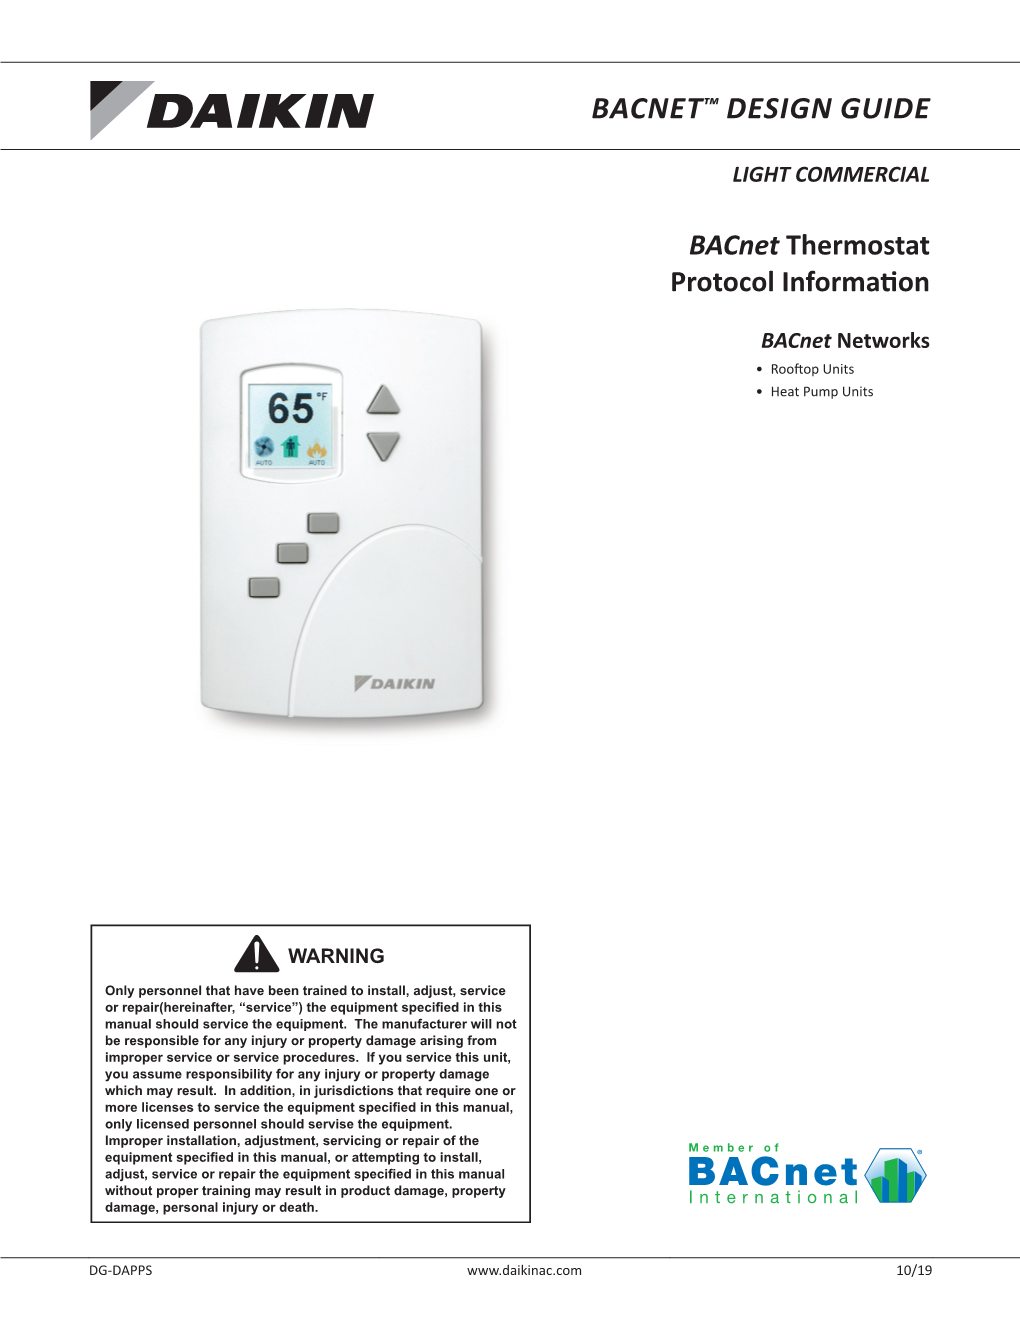 Bacnet Thermostat Protocol Information